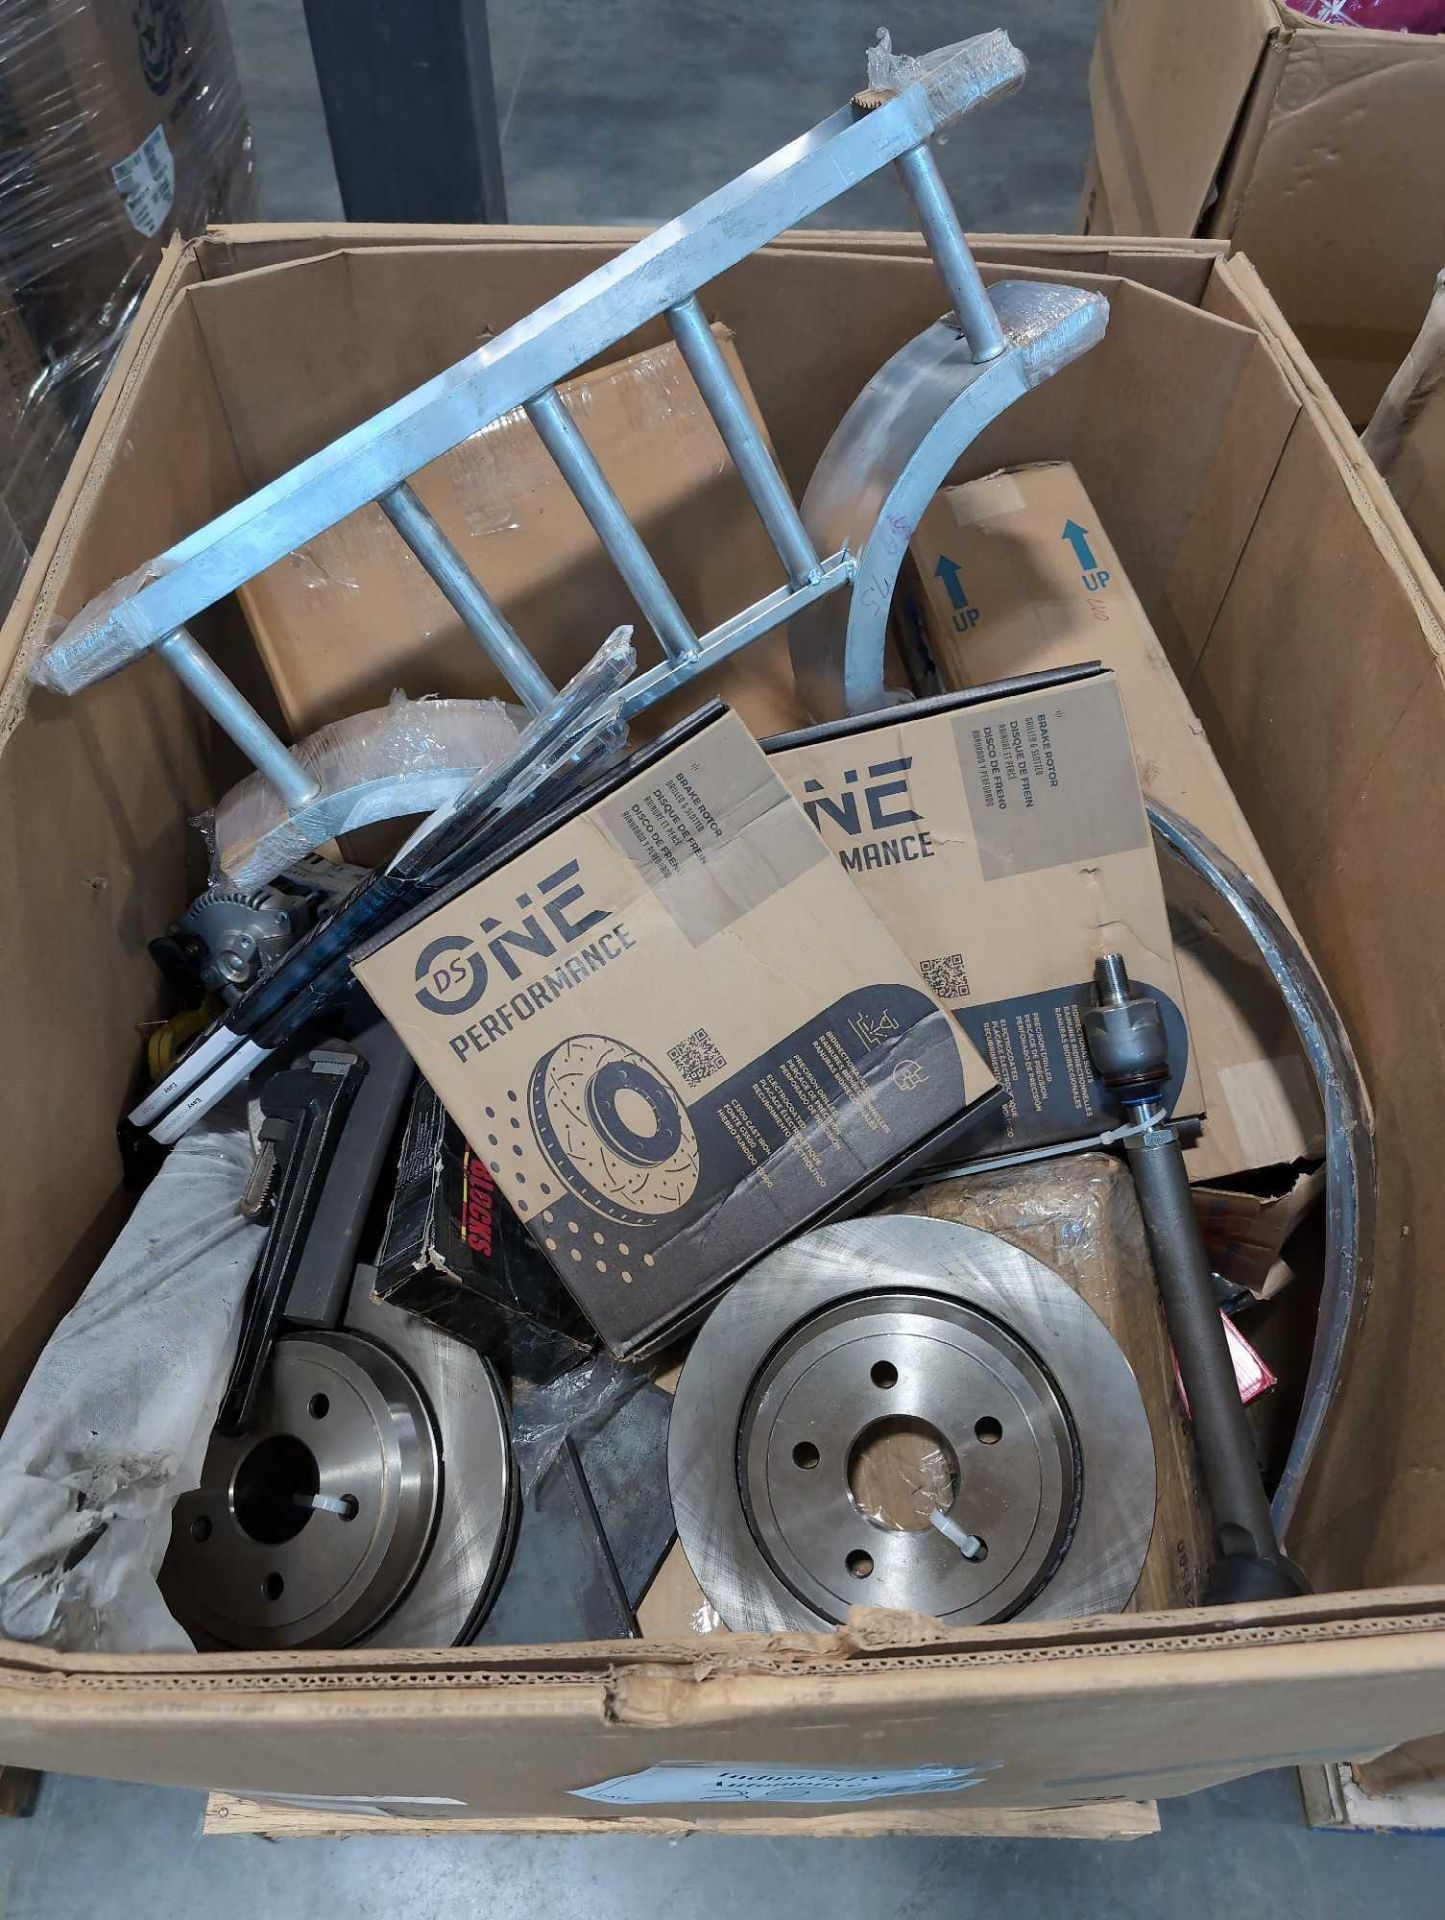 GL- Aluminum piece, brake rotor, tools, motor and more